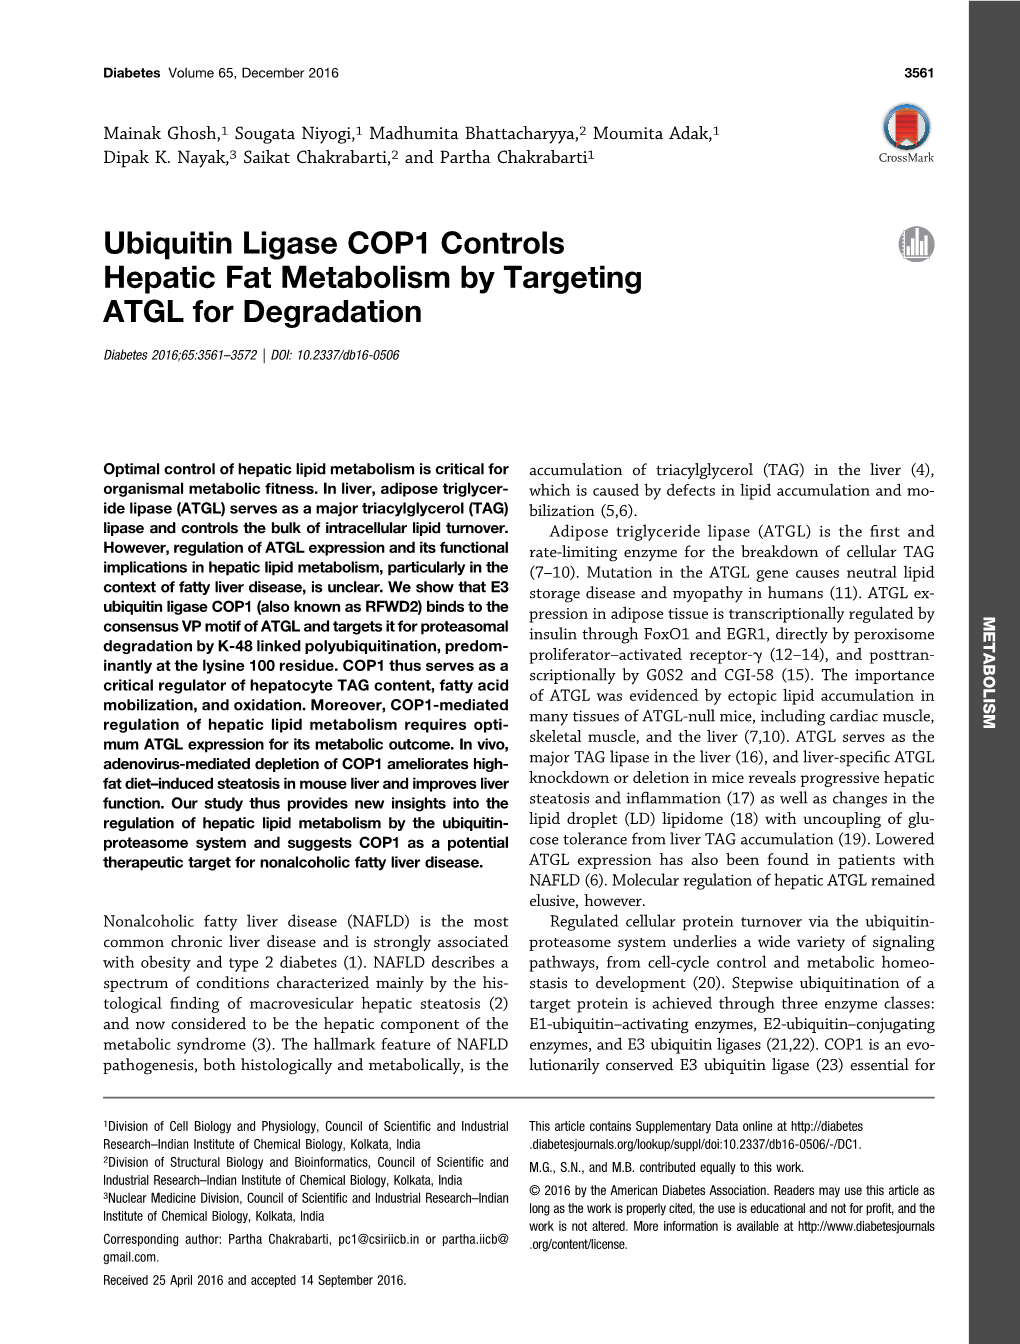 Ubiquitin Ligase COP1 Controls Hepatic Fat Metabolism by Targeting ATGL for Degradation